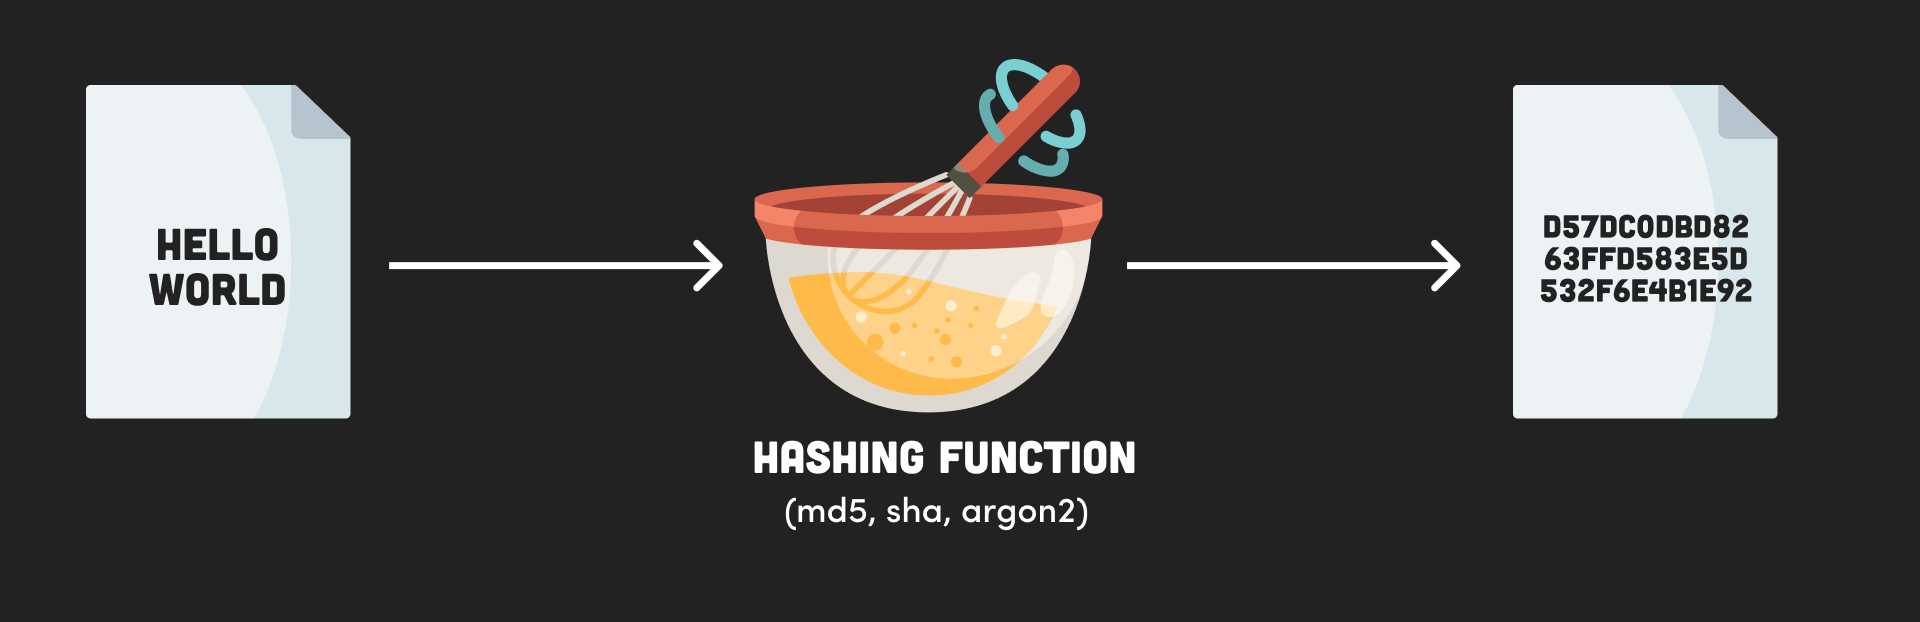 hash function diagram